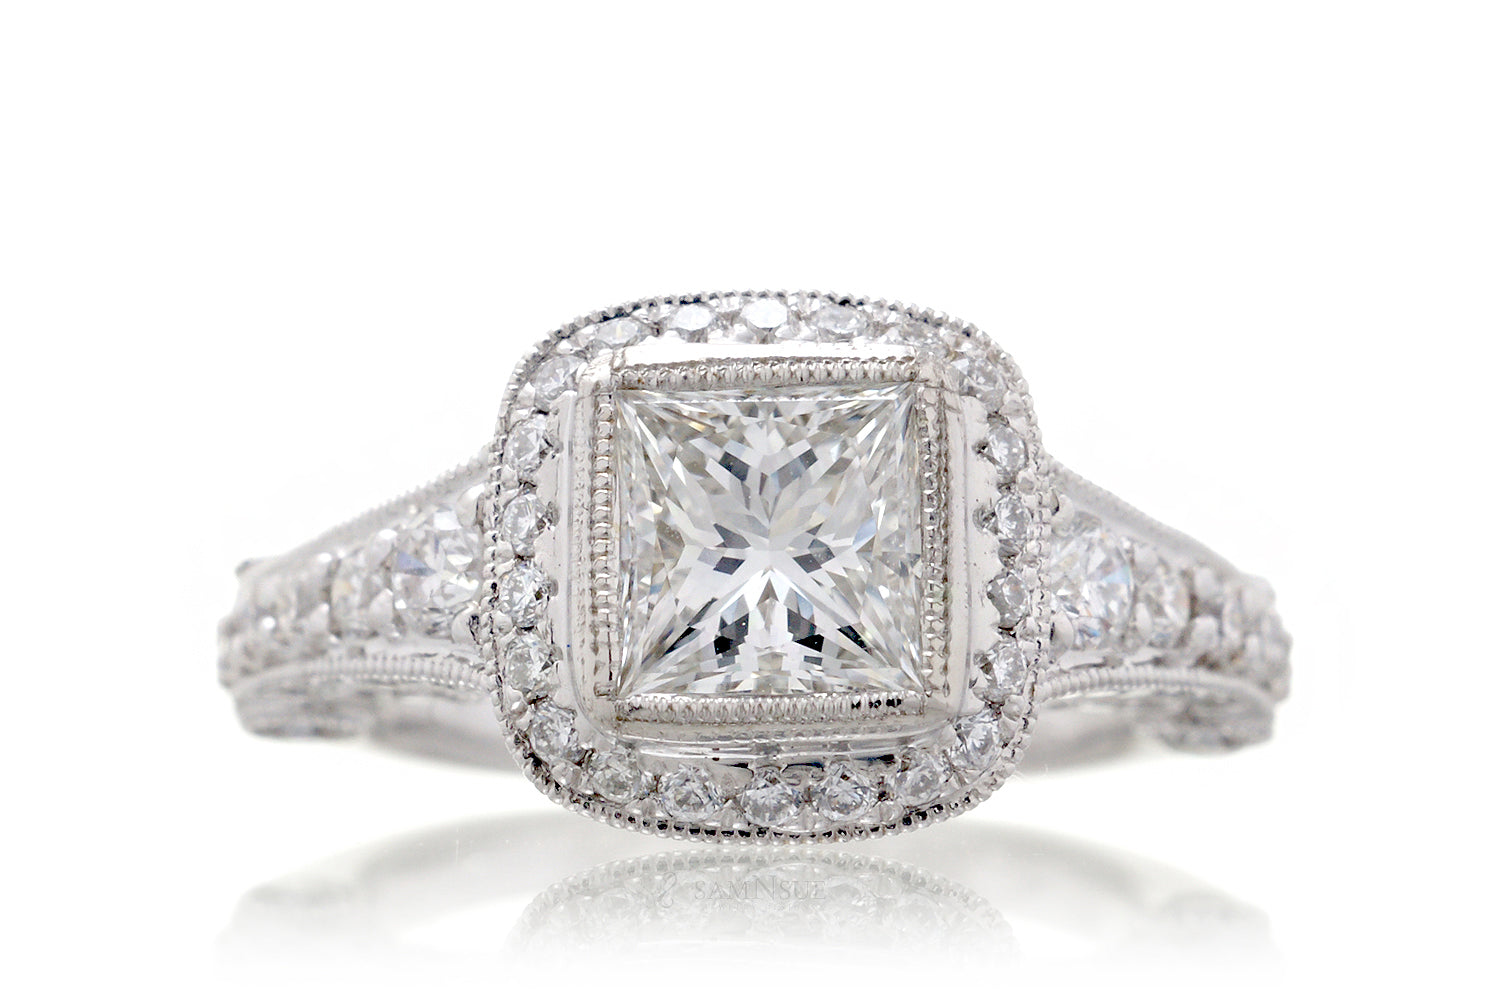 The Silva Princess Diamond Engagement Ring